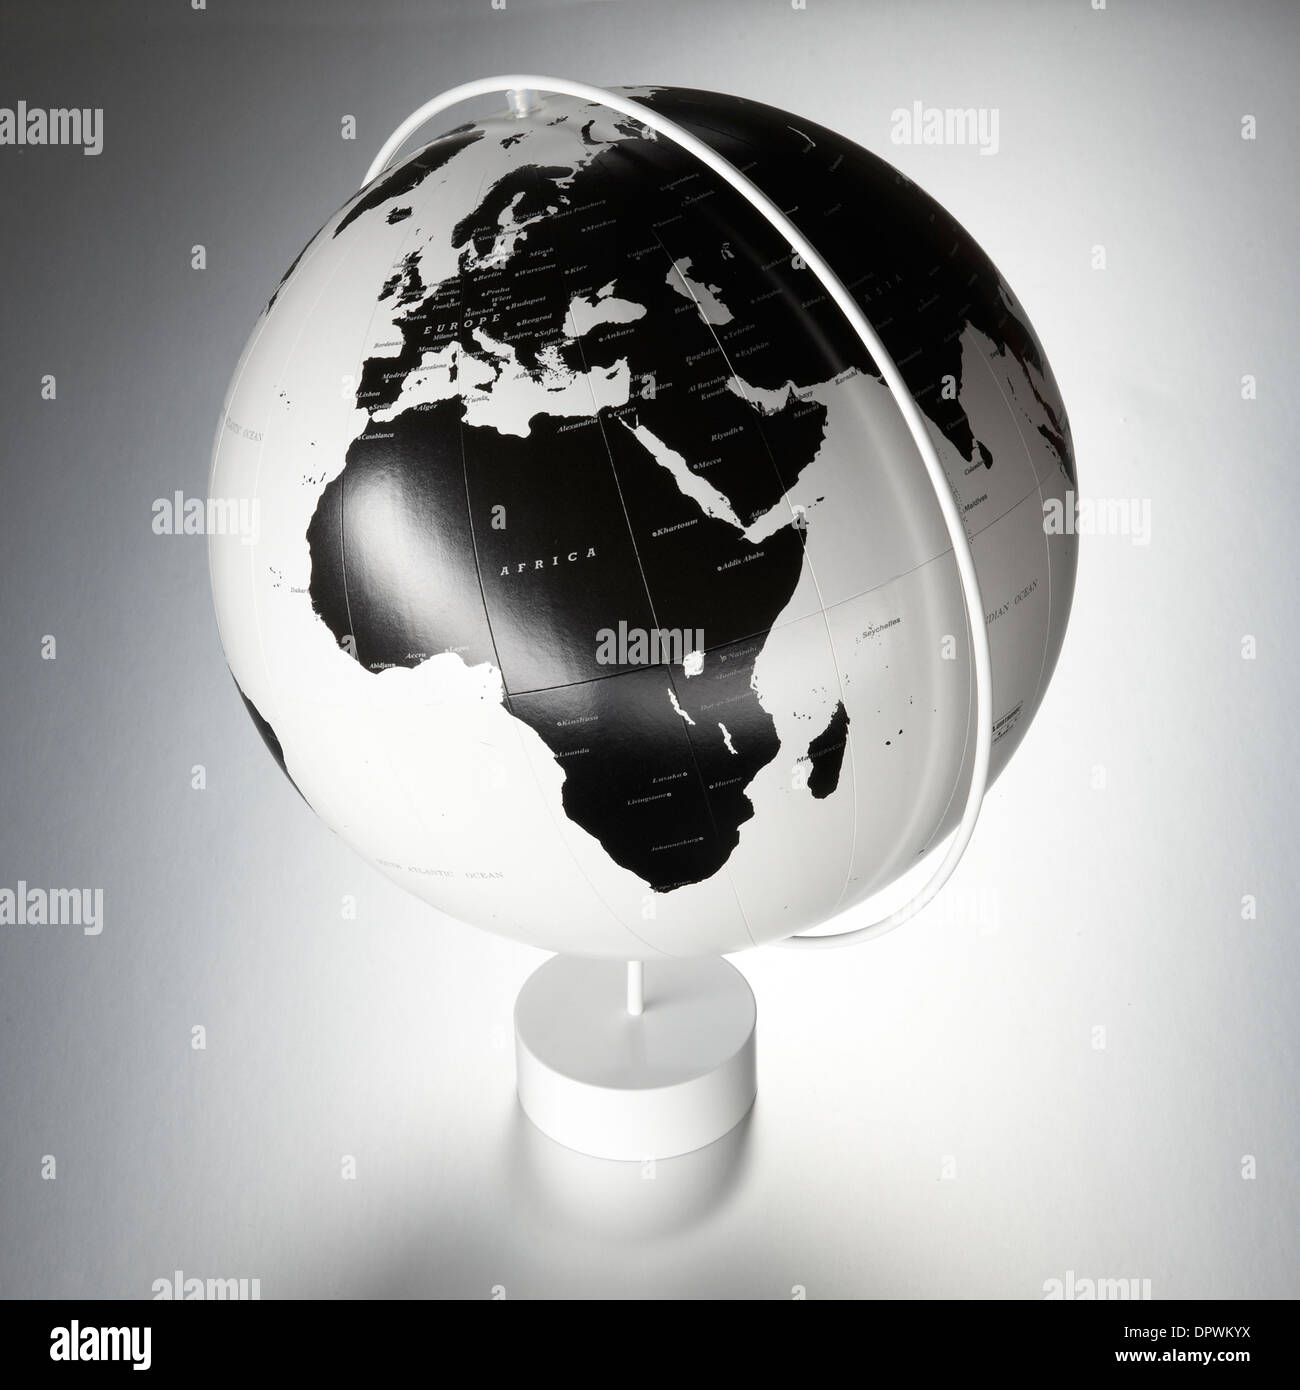 black and white globe world atlas map Stock Photo